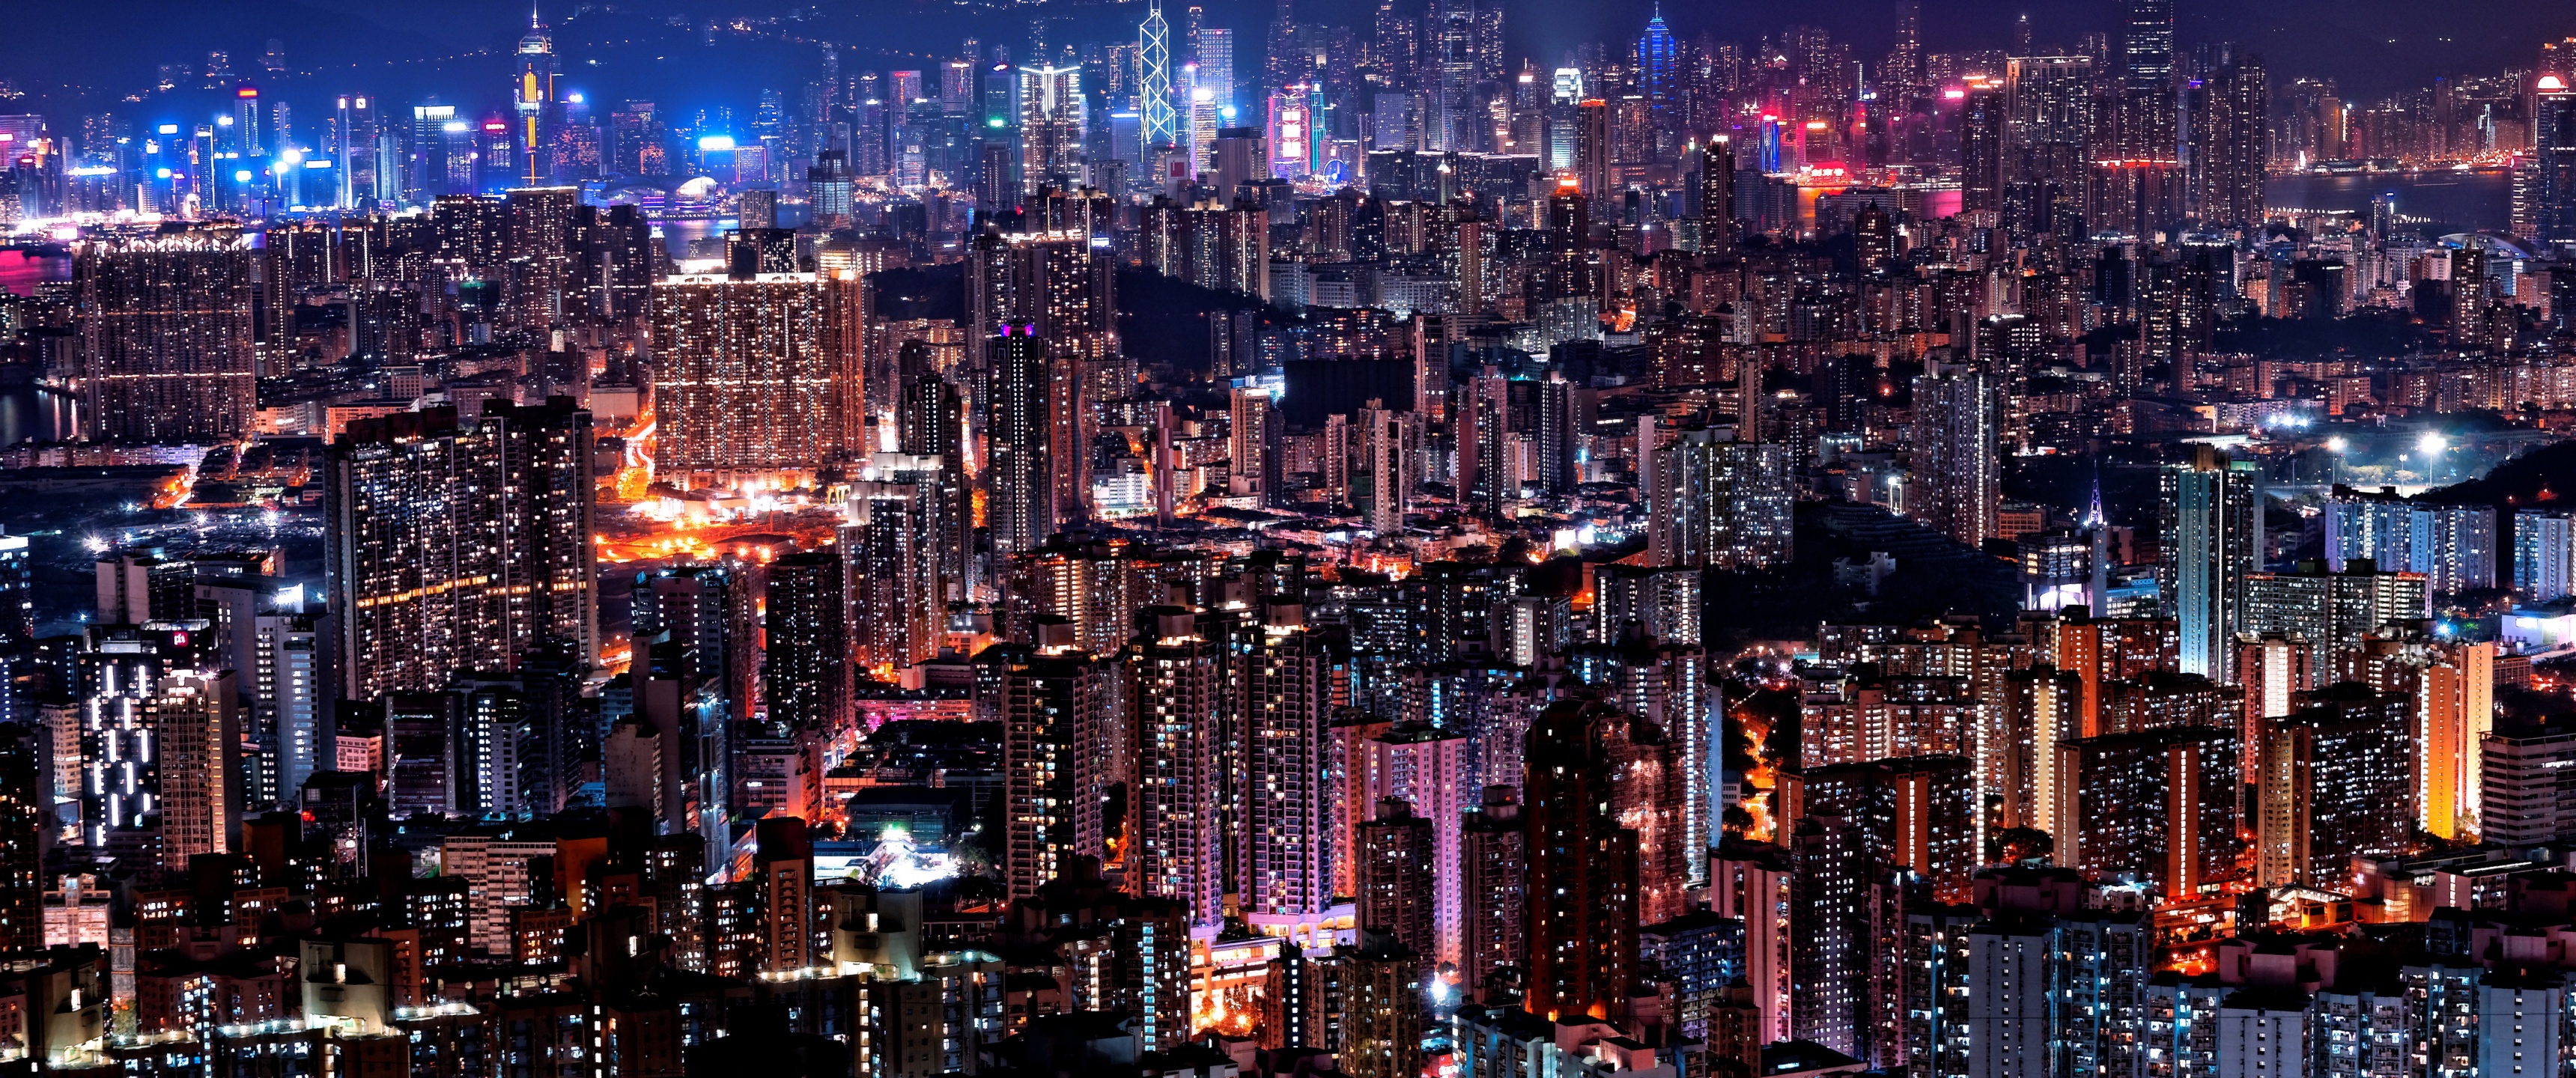 Wallpaper ID 954  city metropolis architecture buildings hong kong 4k  free download